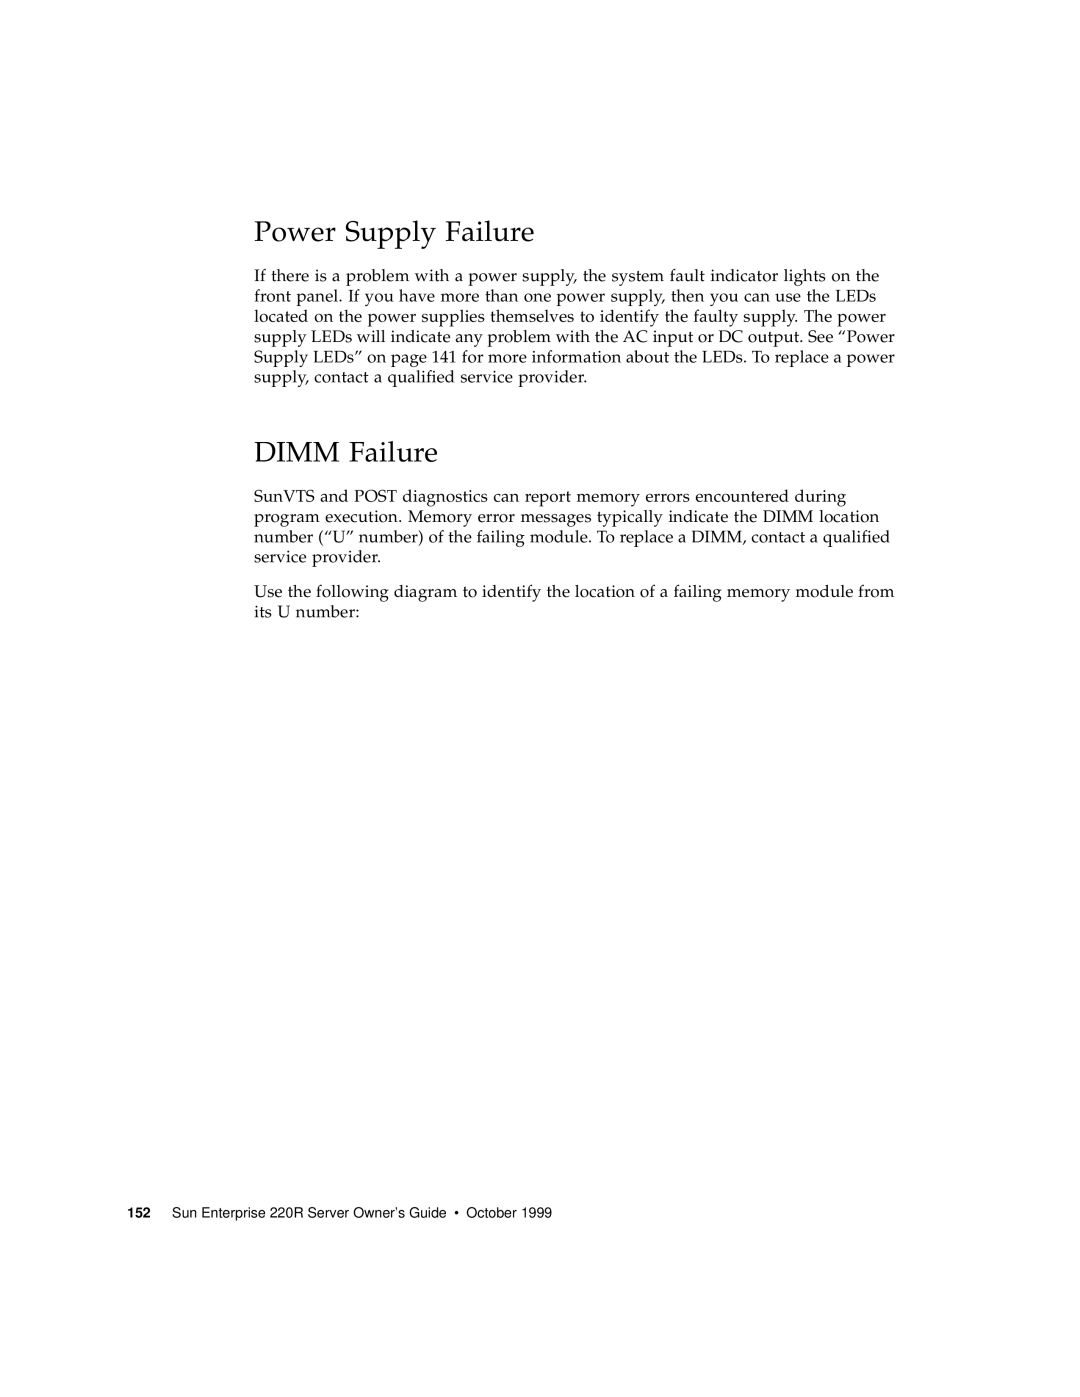 Sun Microsystems manual Power Supply Failure, DIMM Failure, Sun Enterprise 220R Server Owner’s Guide October 